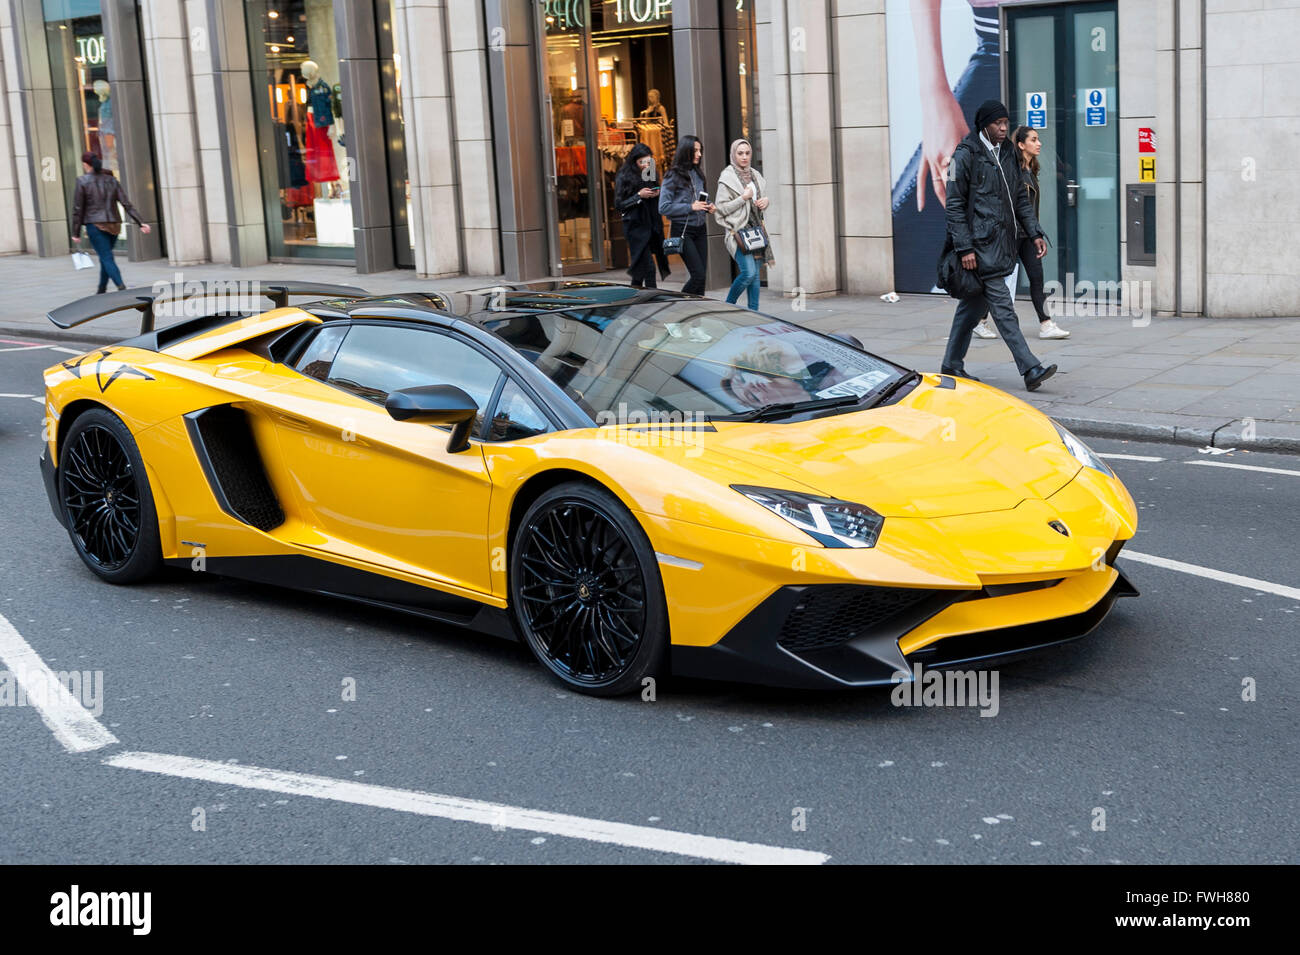 London, UK. 5 April 2016. A bright yellow Lamborghini ...